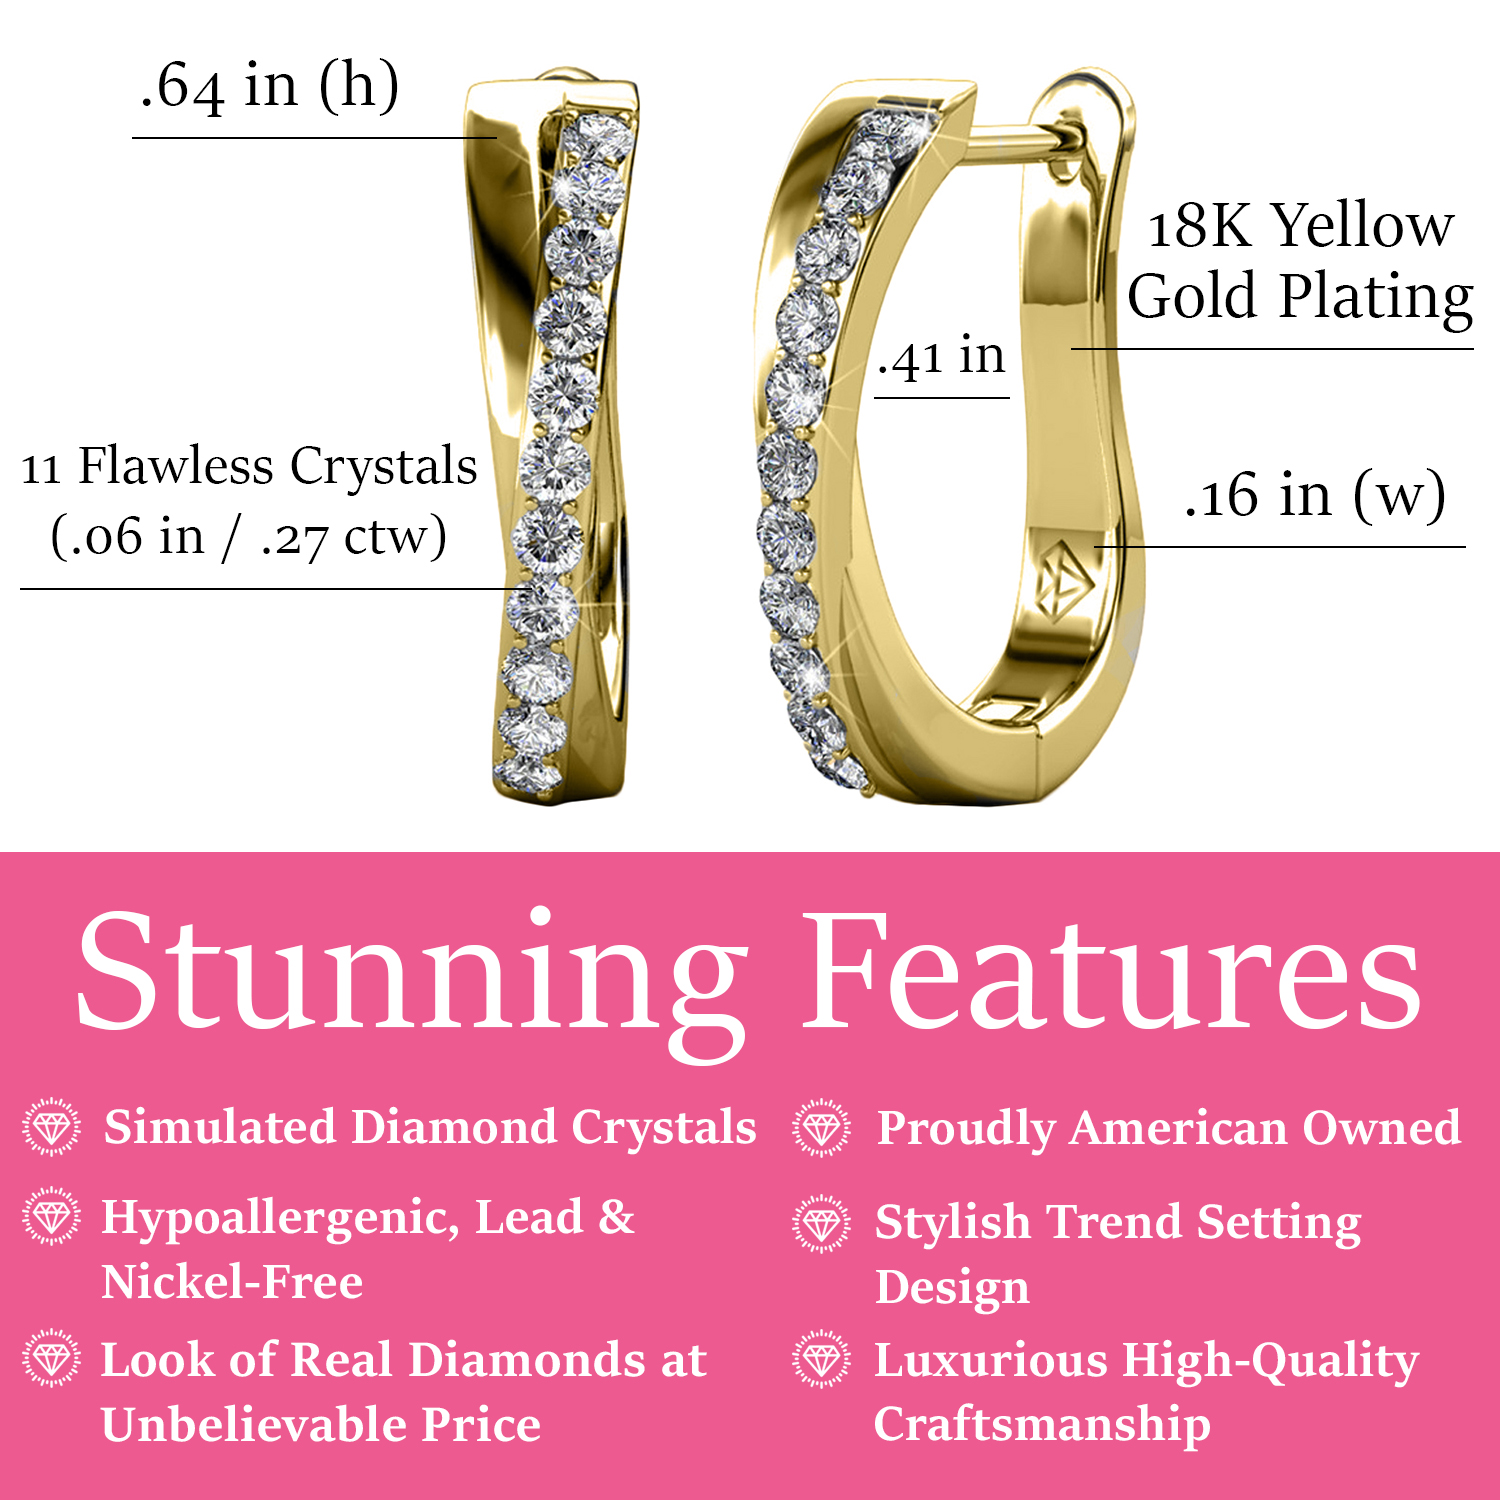 Cate & Chloe Amaya 18k Yellow Gold Plated Hoop Earrings | Women's Crystal Earrings, Jewelry Gift for Her - image 2 of 9